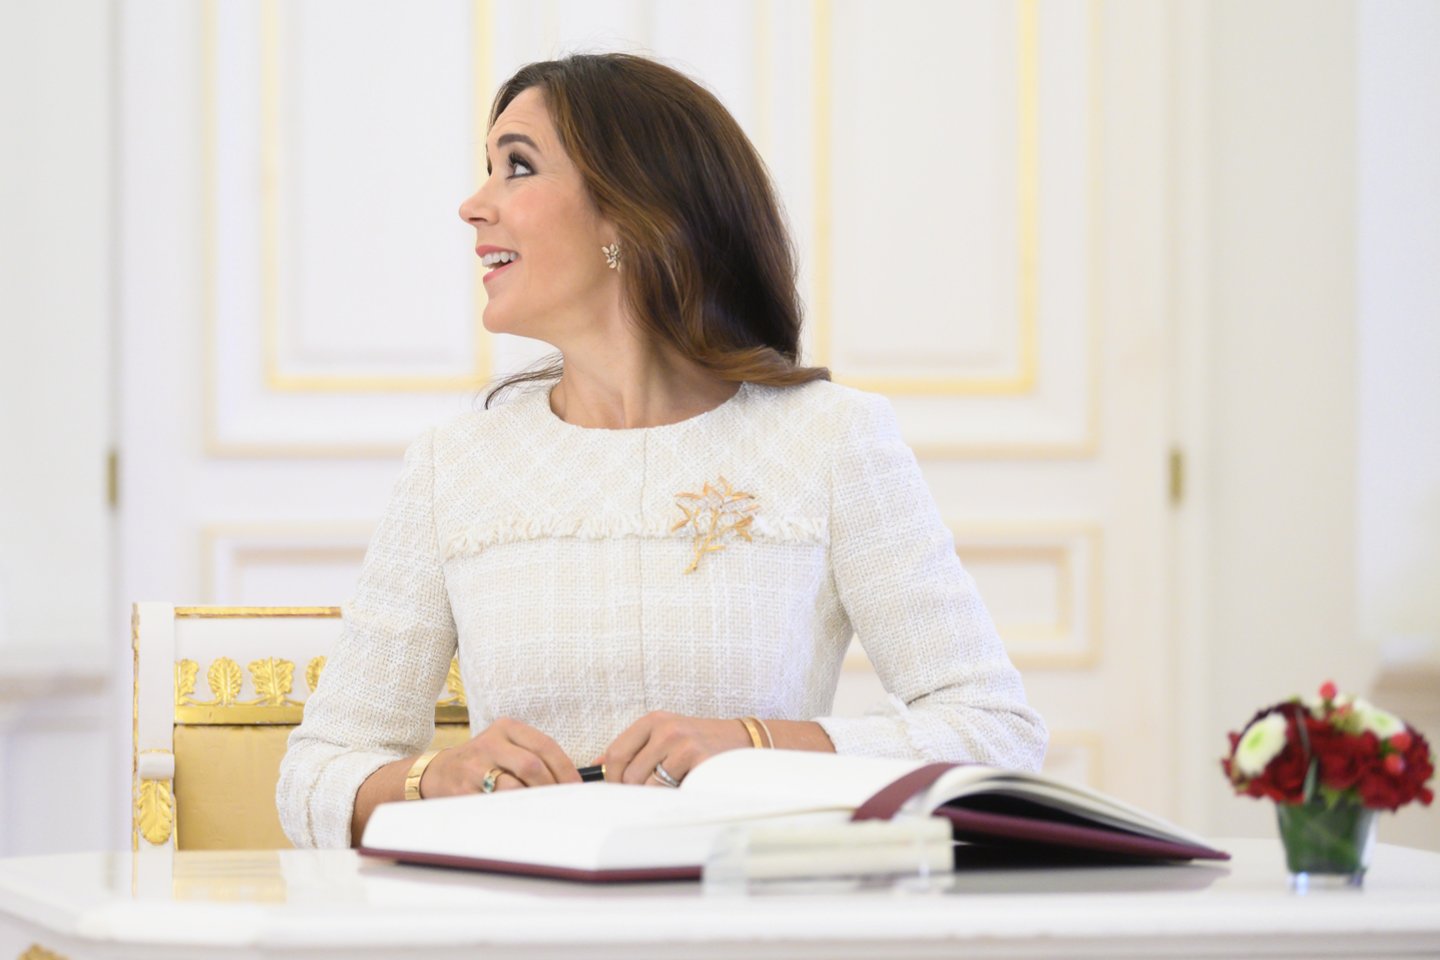 Prezidentūroje įvyko iškilmingas Danijos princesės Mary priėmimas.<br> V.Skaraičio nuotr.